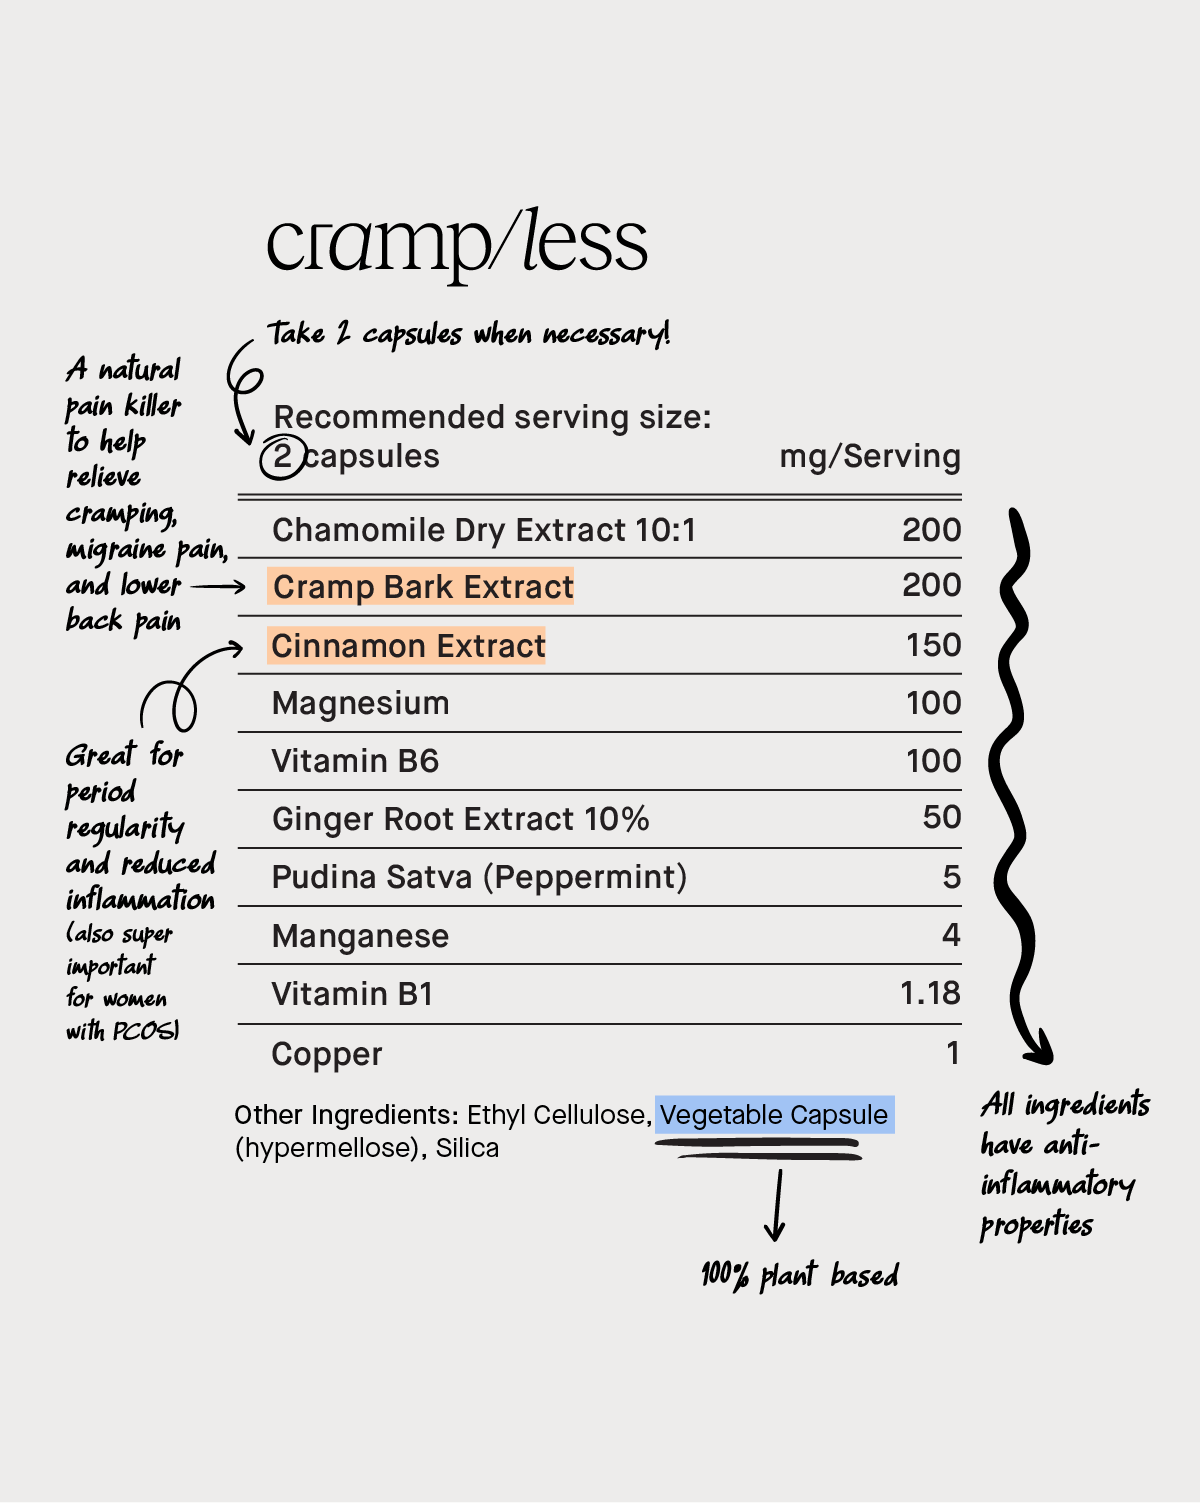 cramp/less